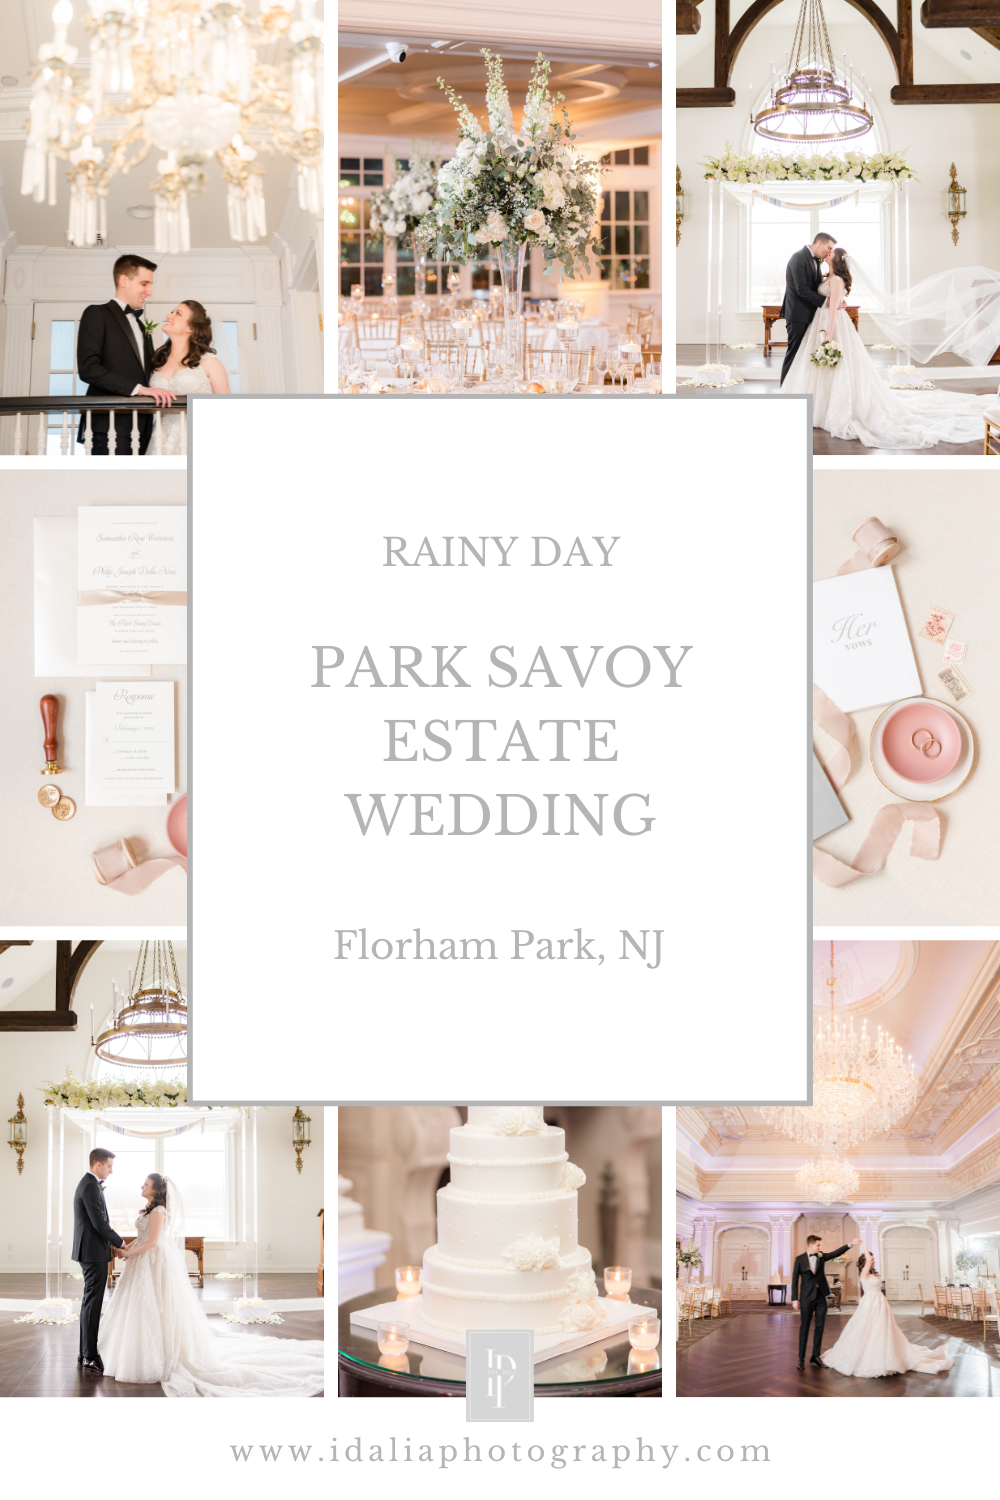 Rainy Wedding Day at Park Savoy Estate with Jewish ceremony photographed by New Jersey wedding photographer Idalia Photography